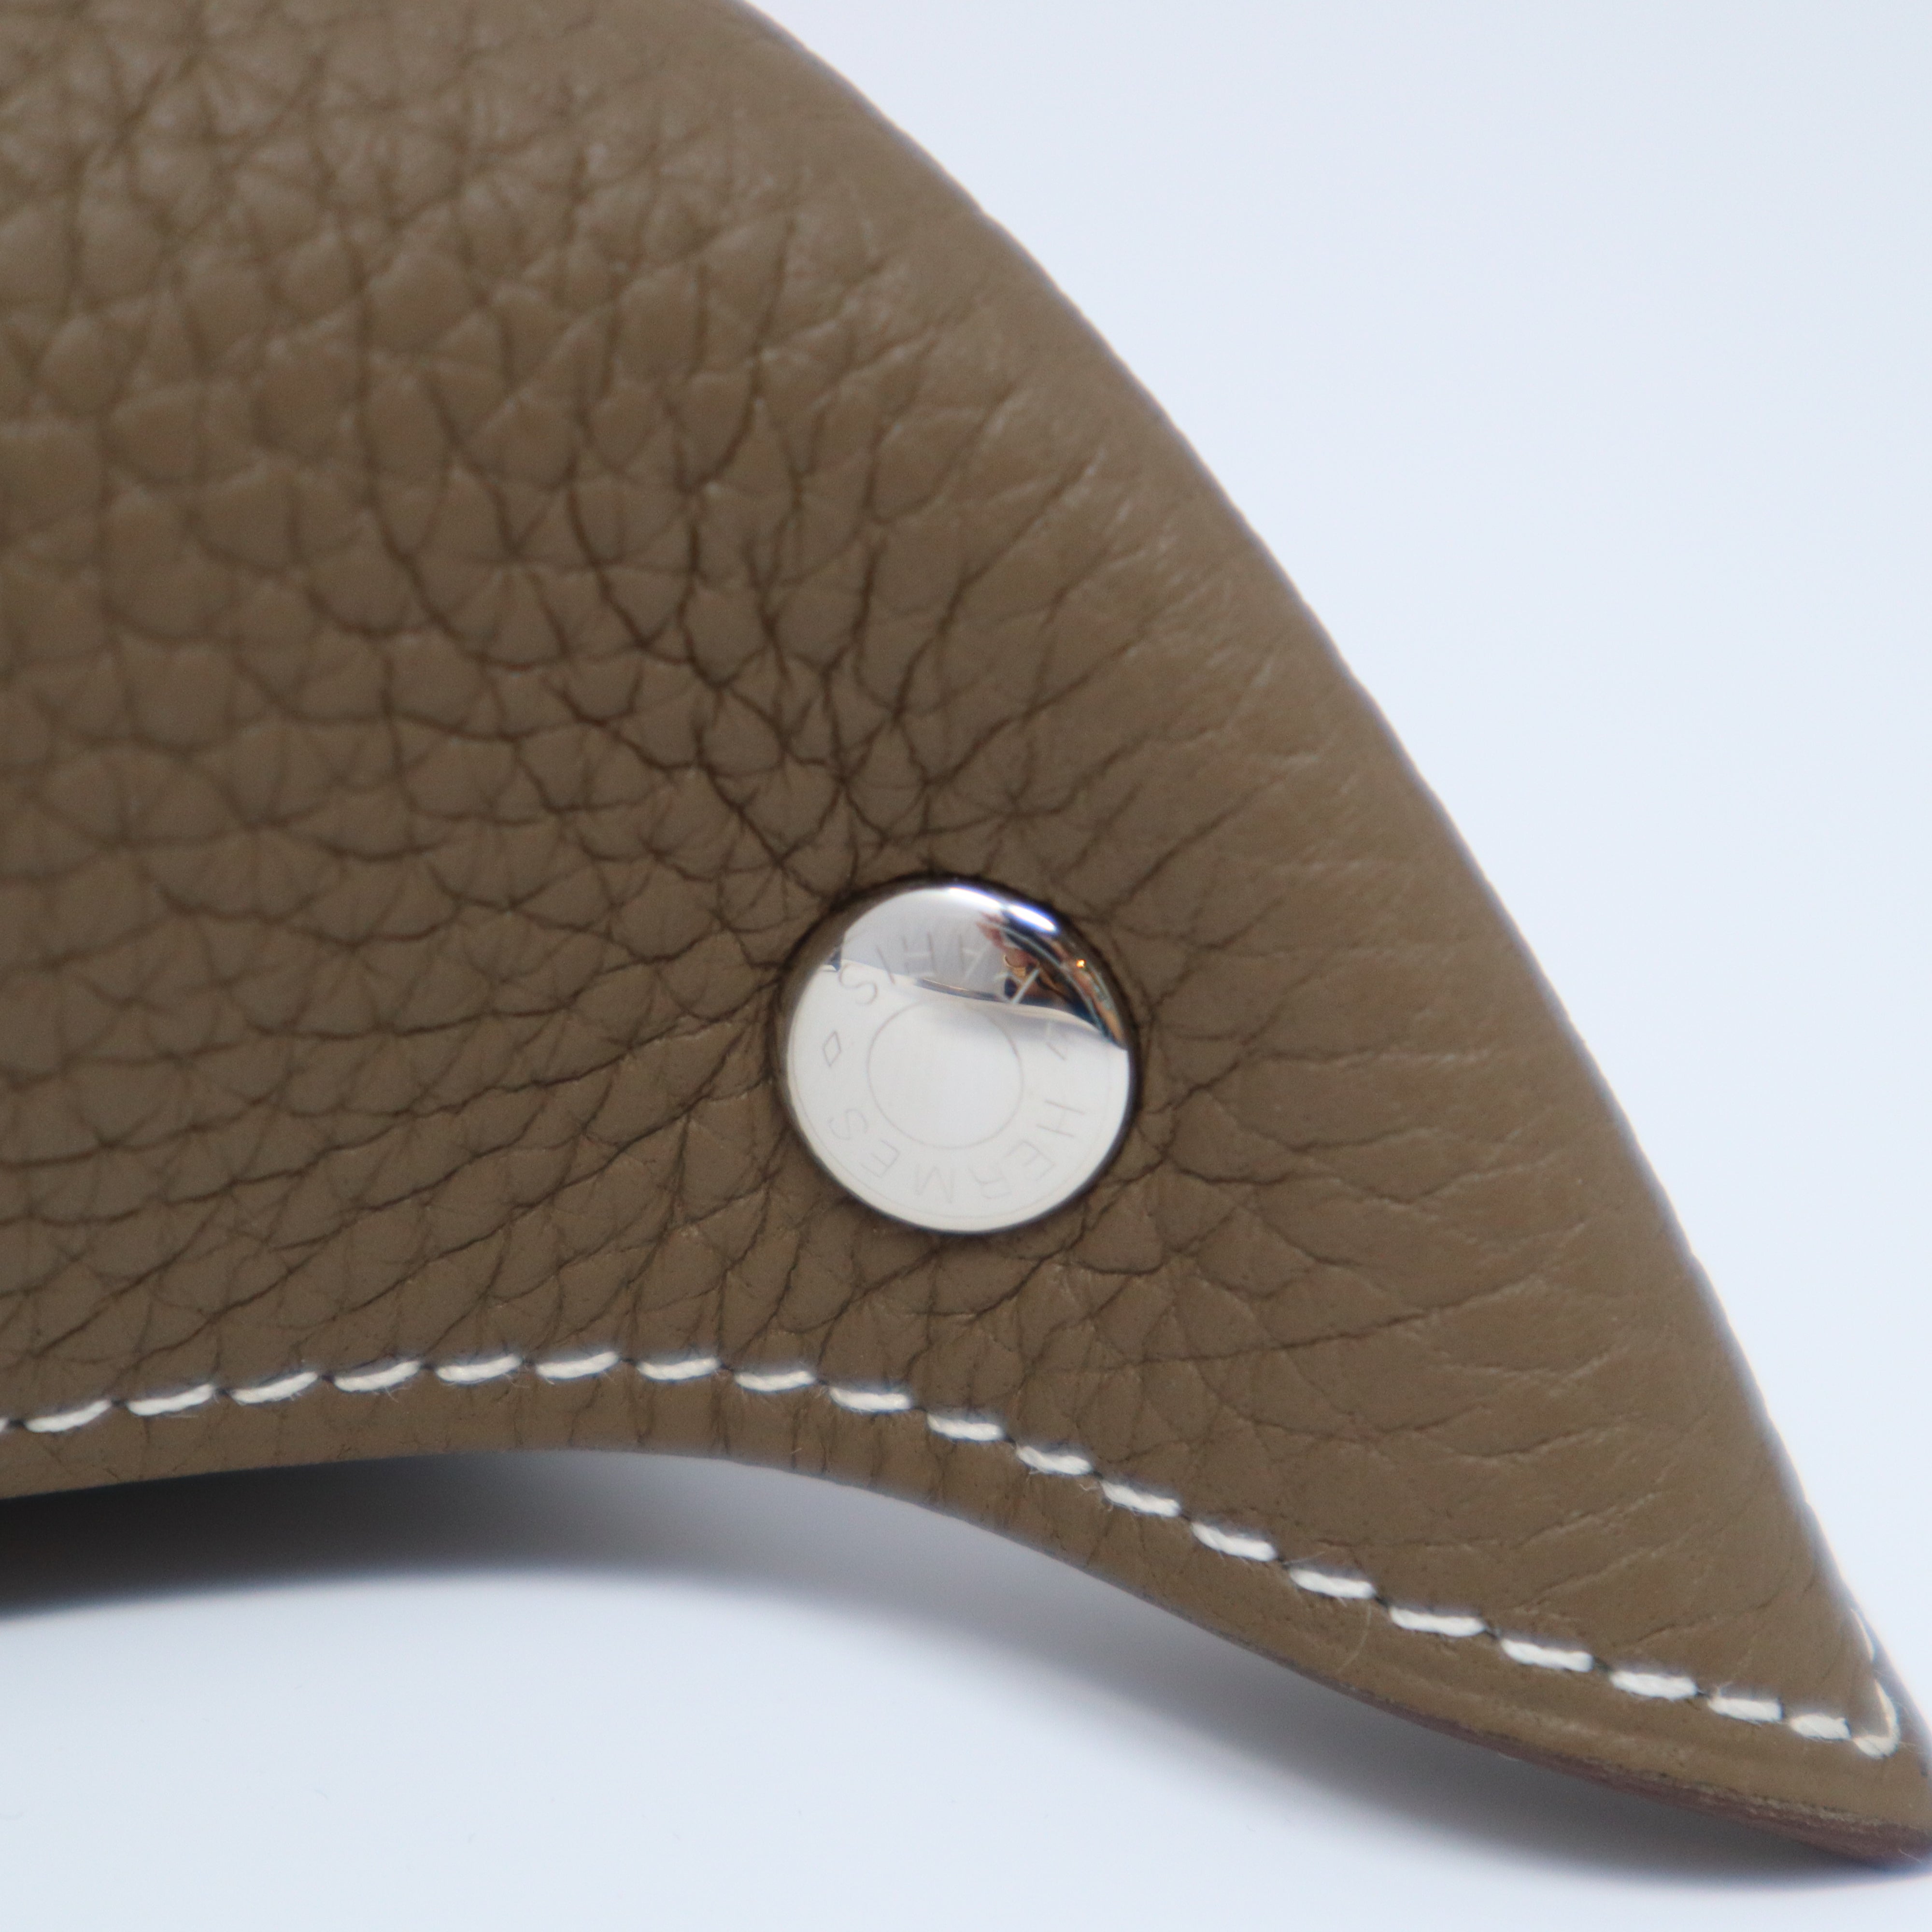 Hermes Mises et Relances GM Leather Change Tray – Madison Avenue